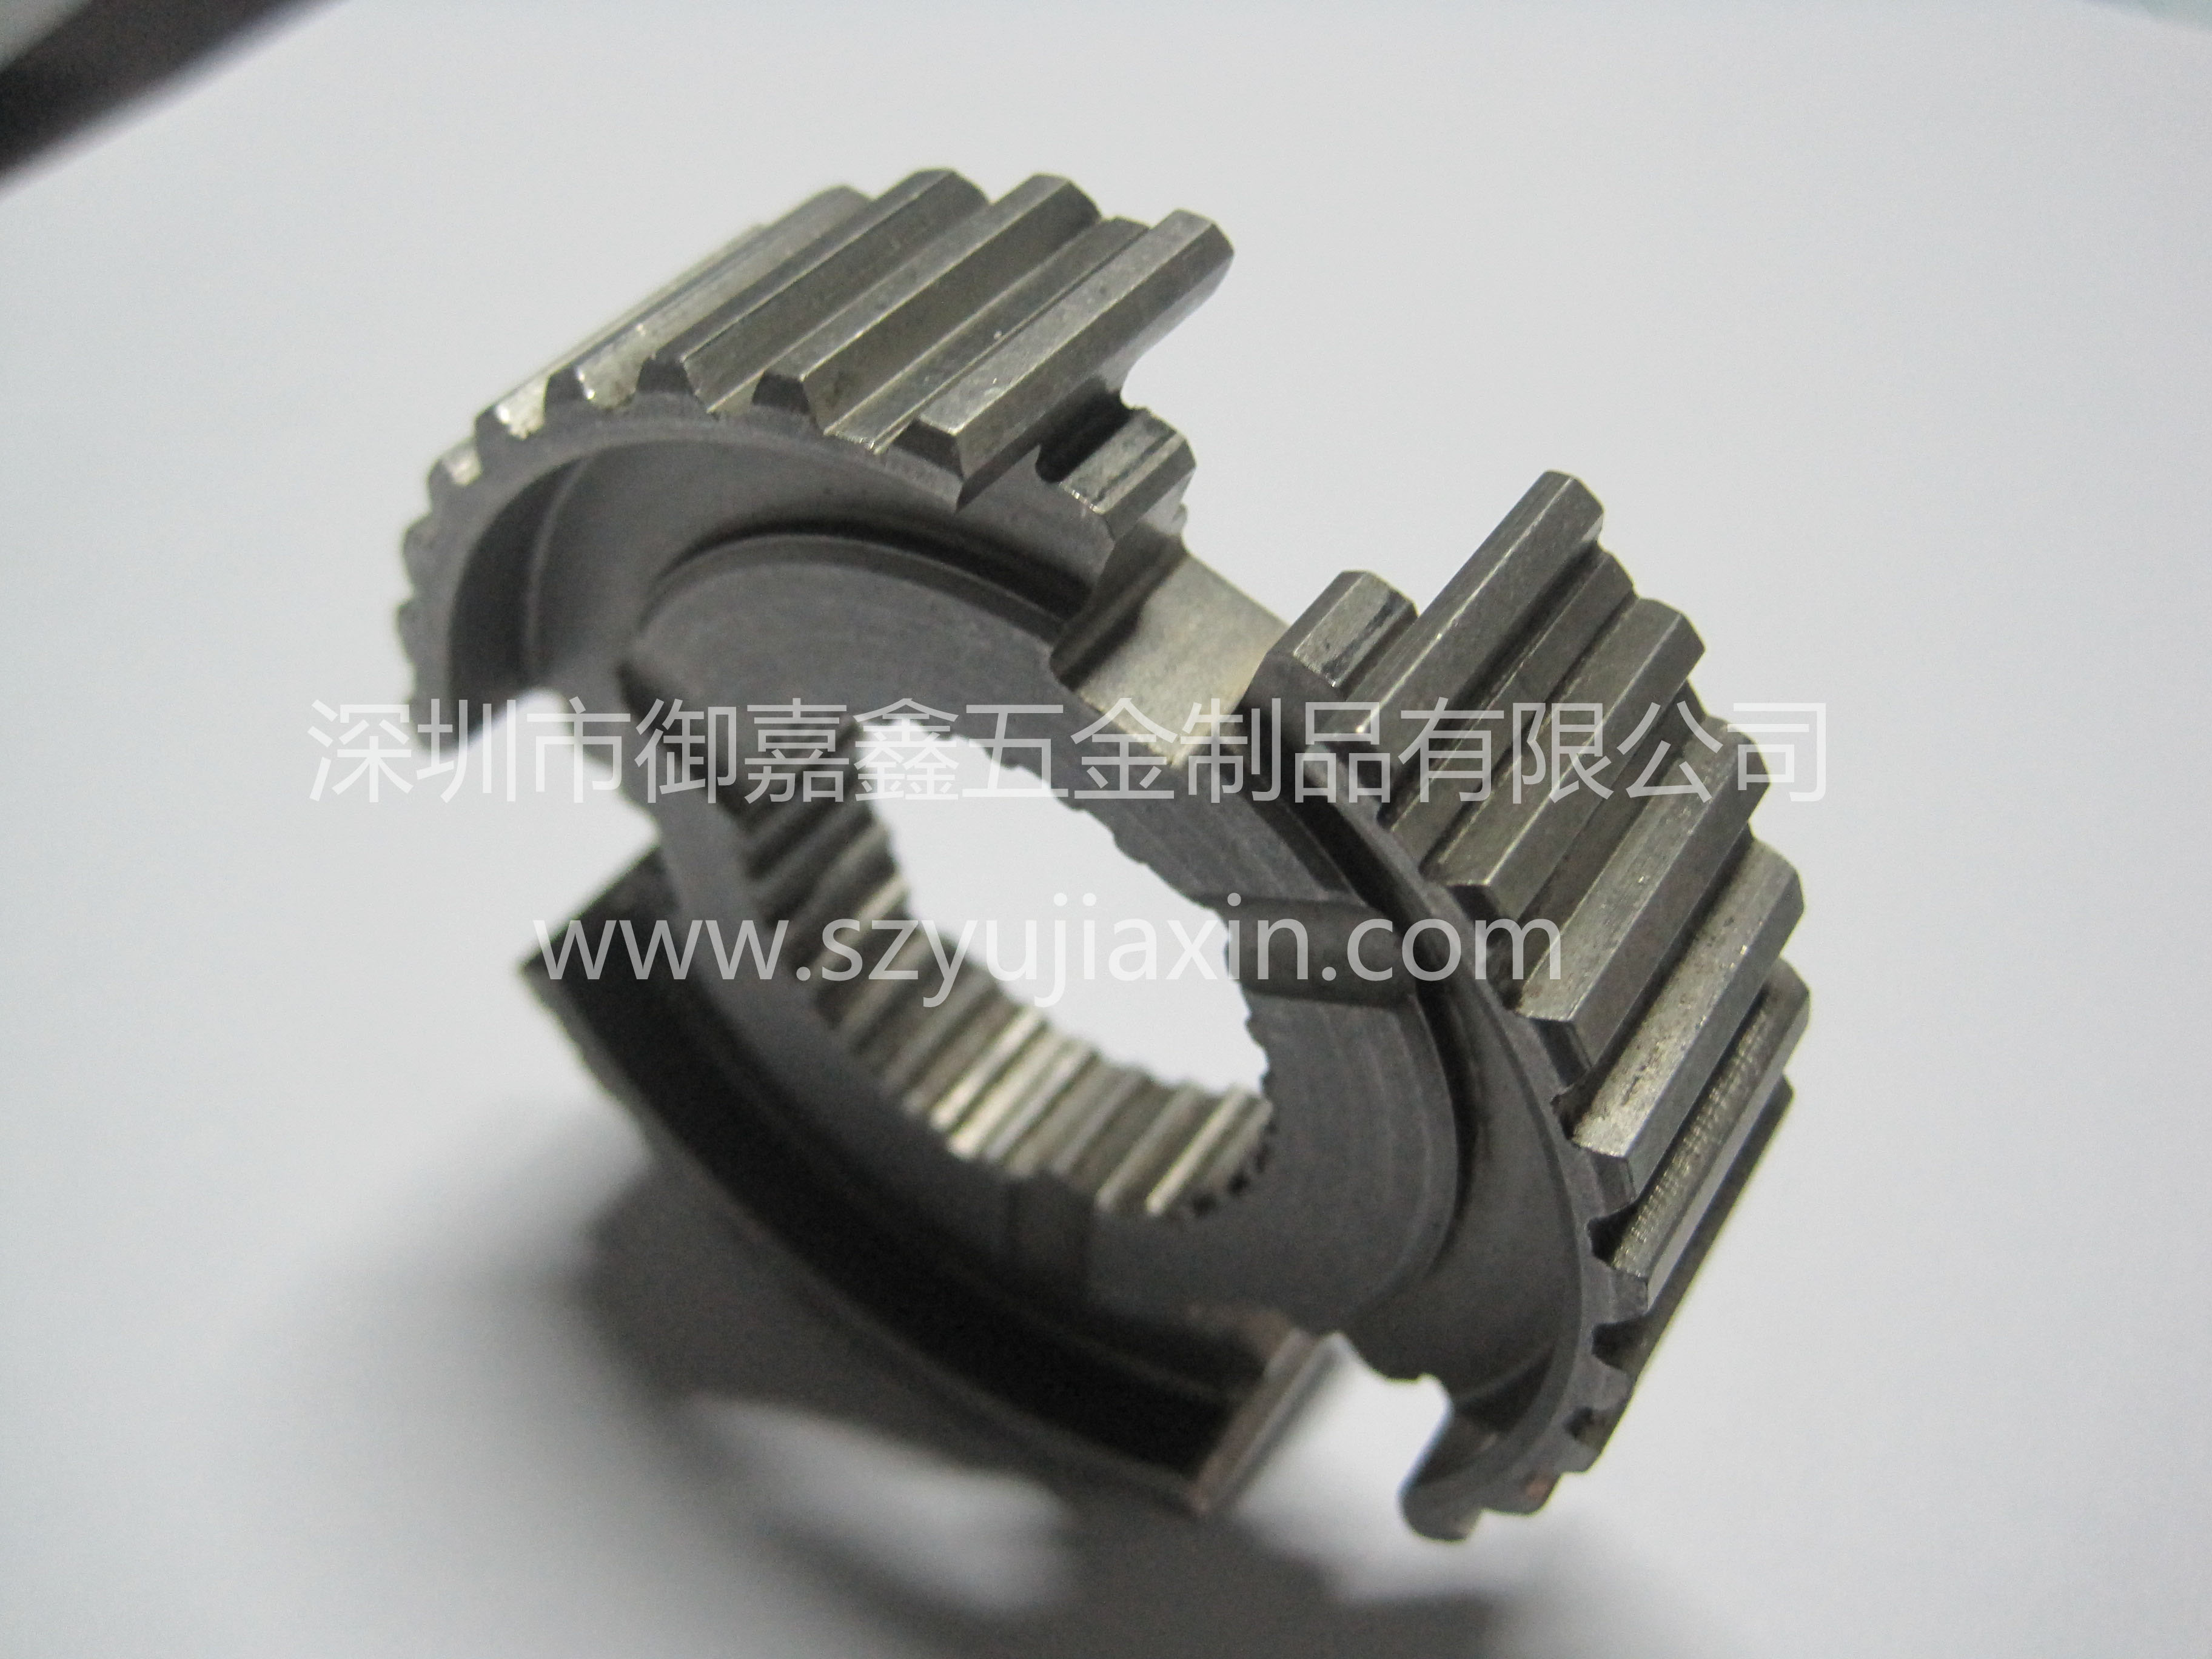 Automobile synchronizer gear|automotive gear|special-shaped gear|precision gear|Guangdong gear|high quality gear|Baoan gear|Longgang gear|gear factory